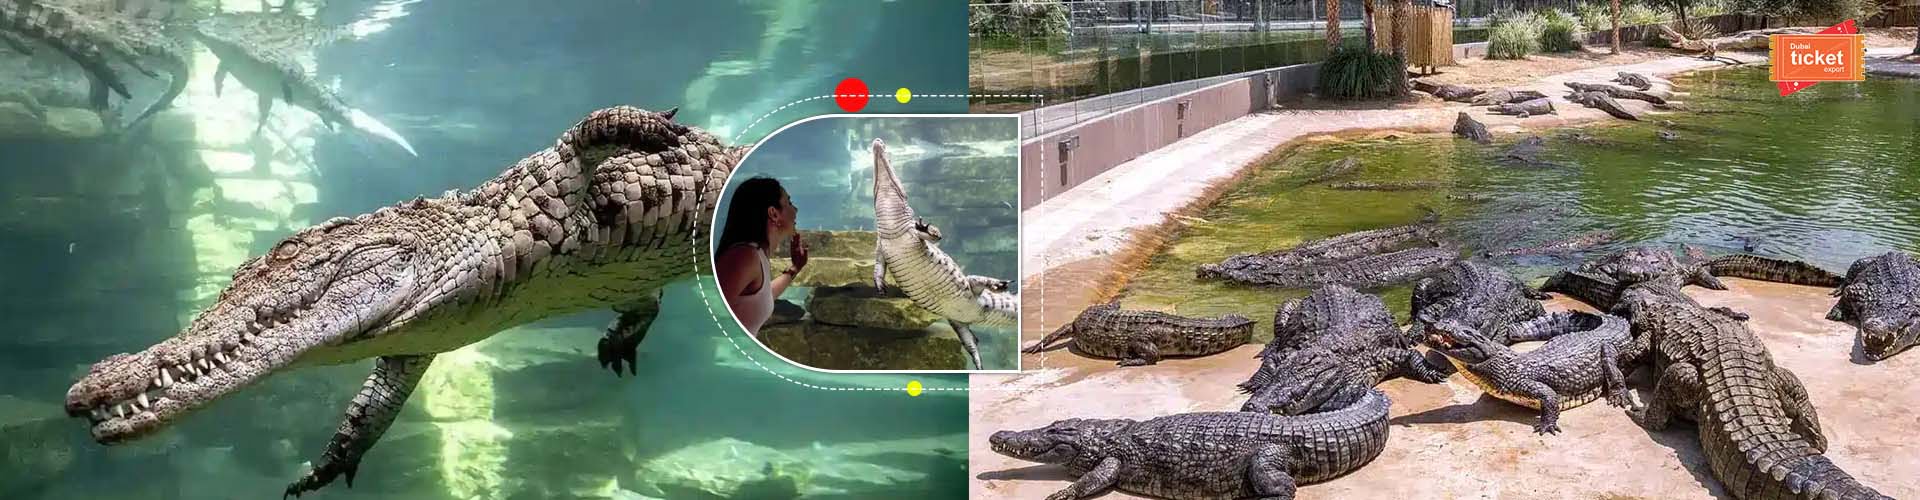 Crocodile Park Dubai